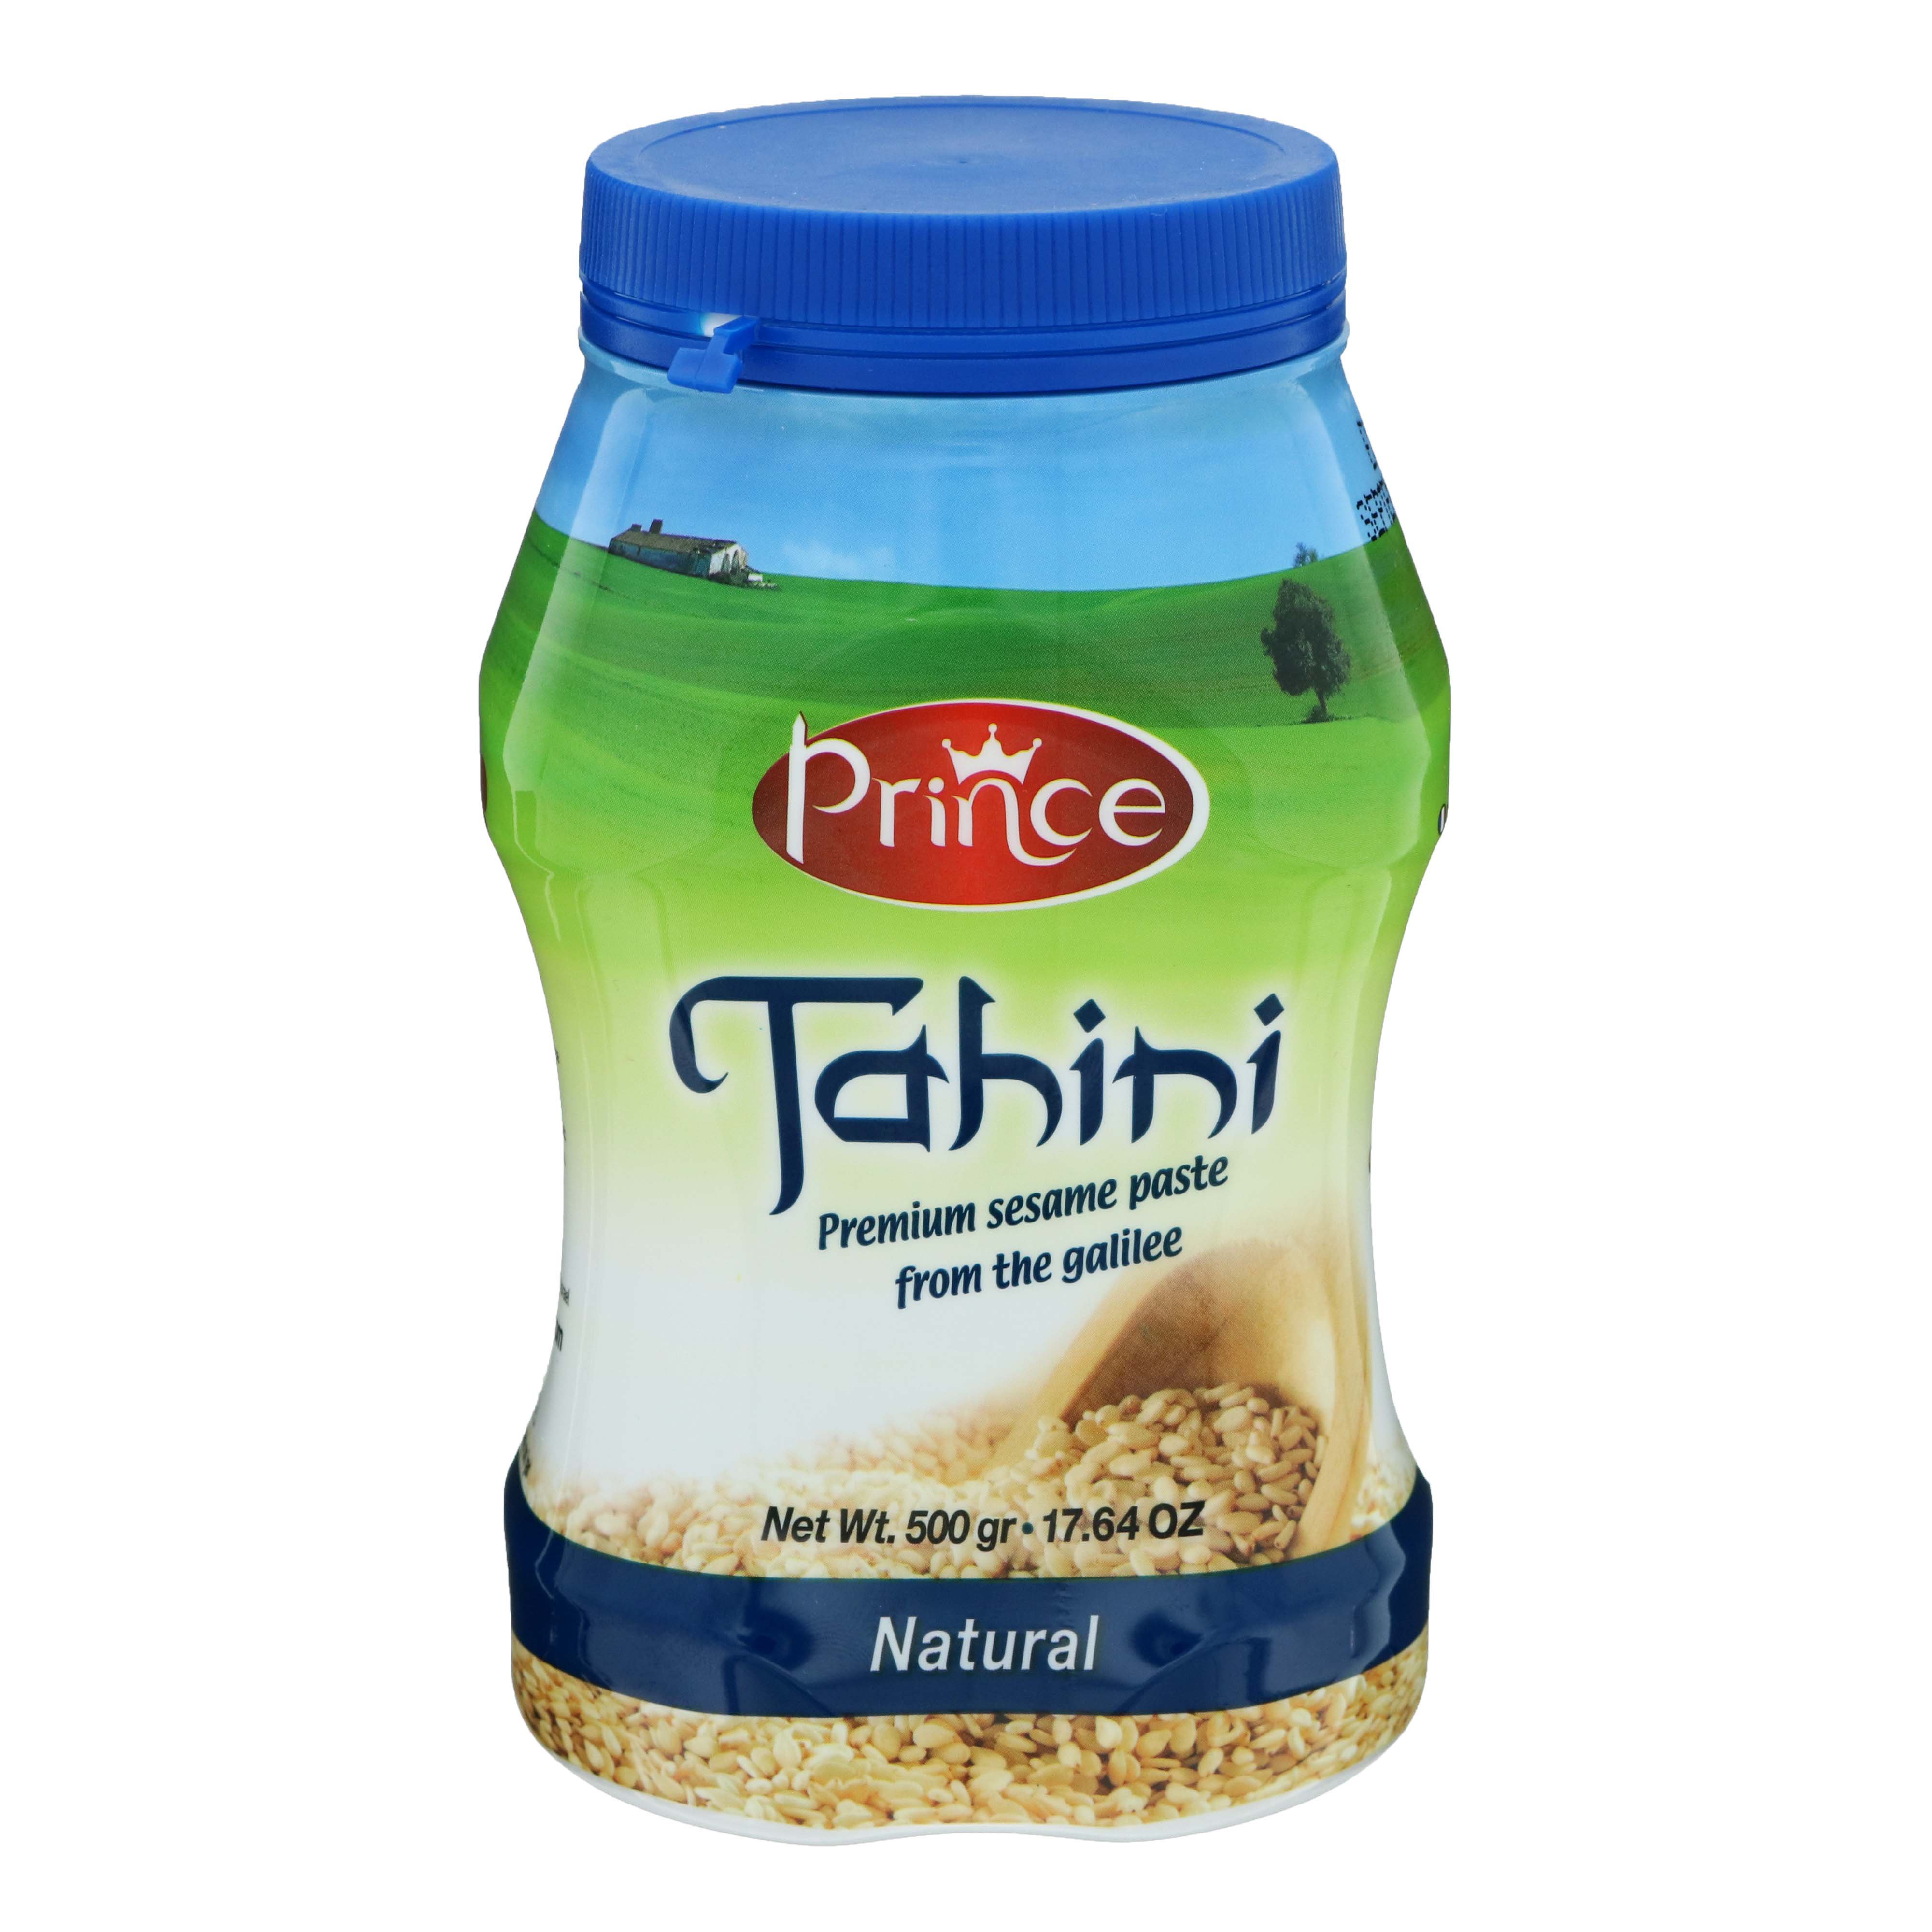 Prince Natural Tahini - Shop Specialty Sauces at H-E-B